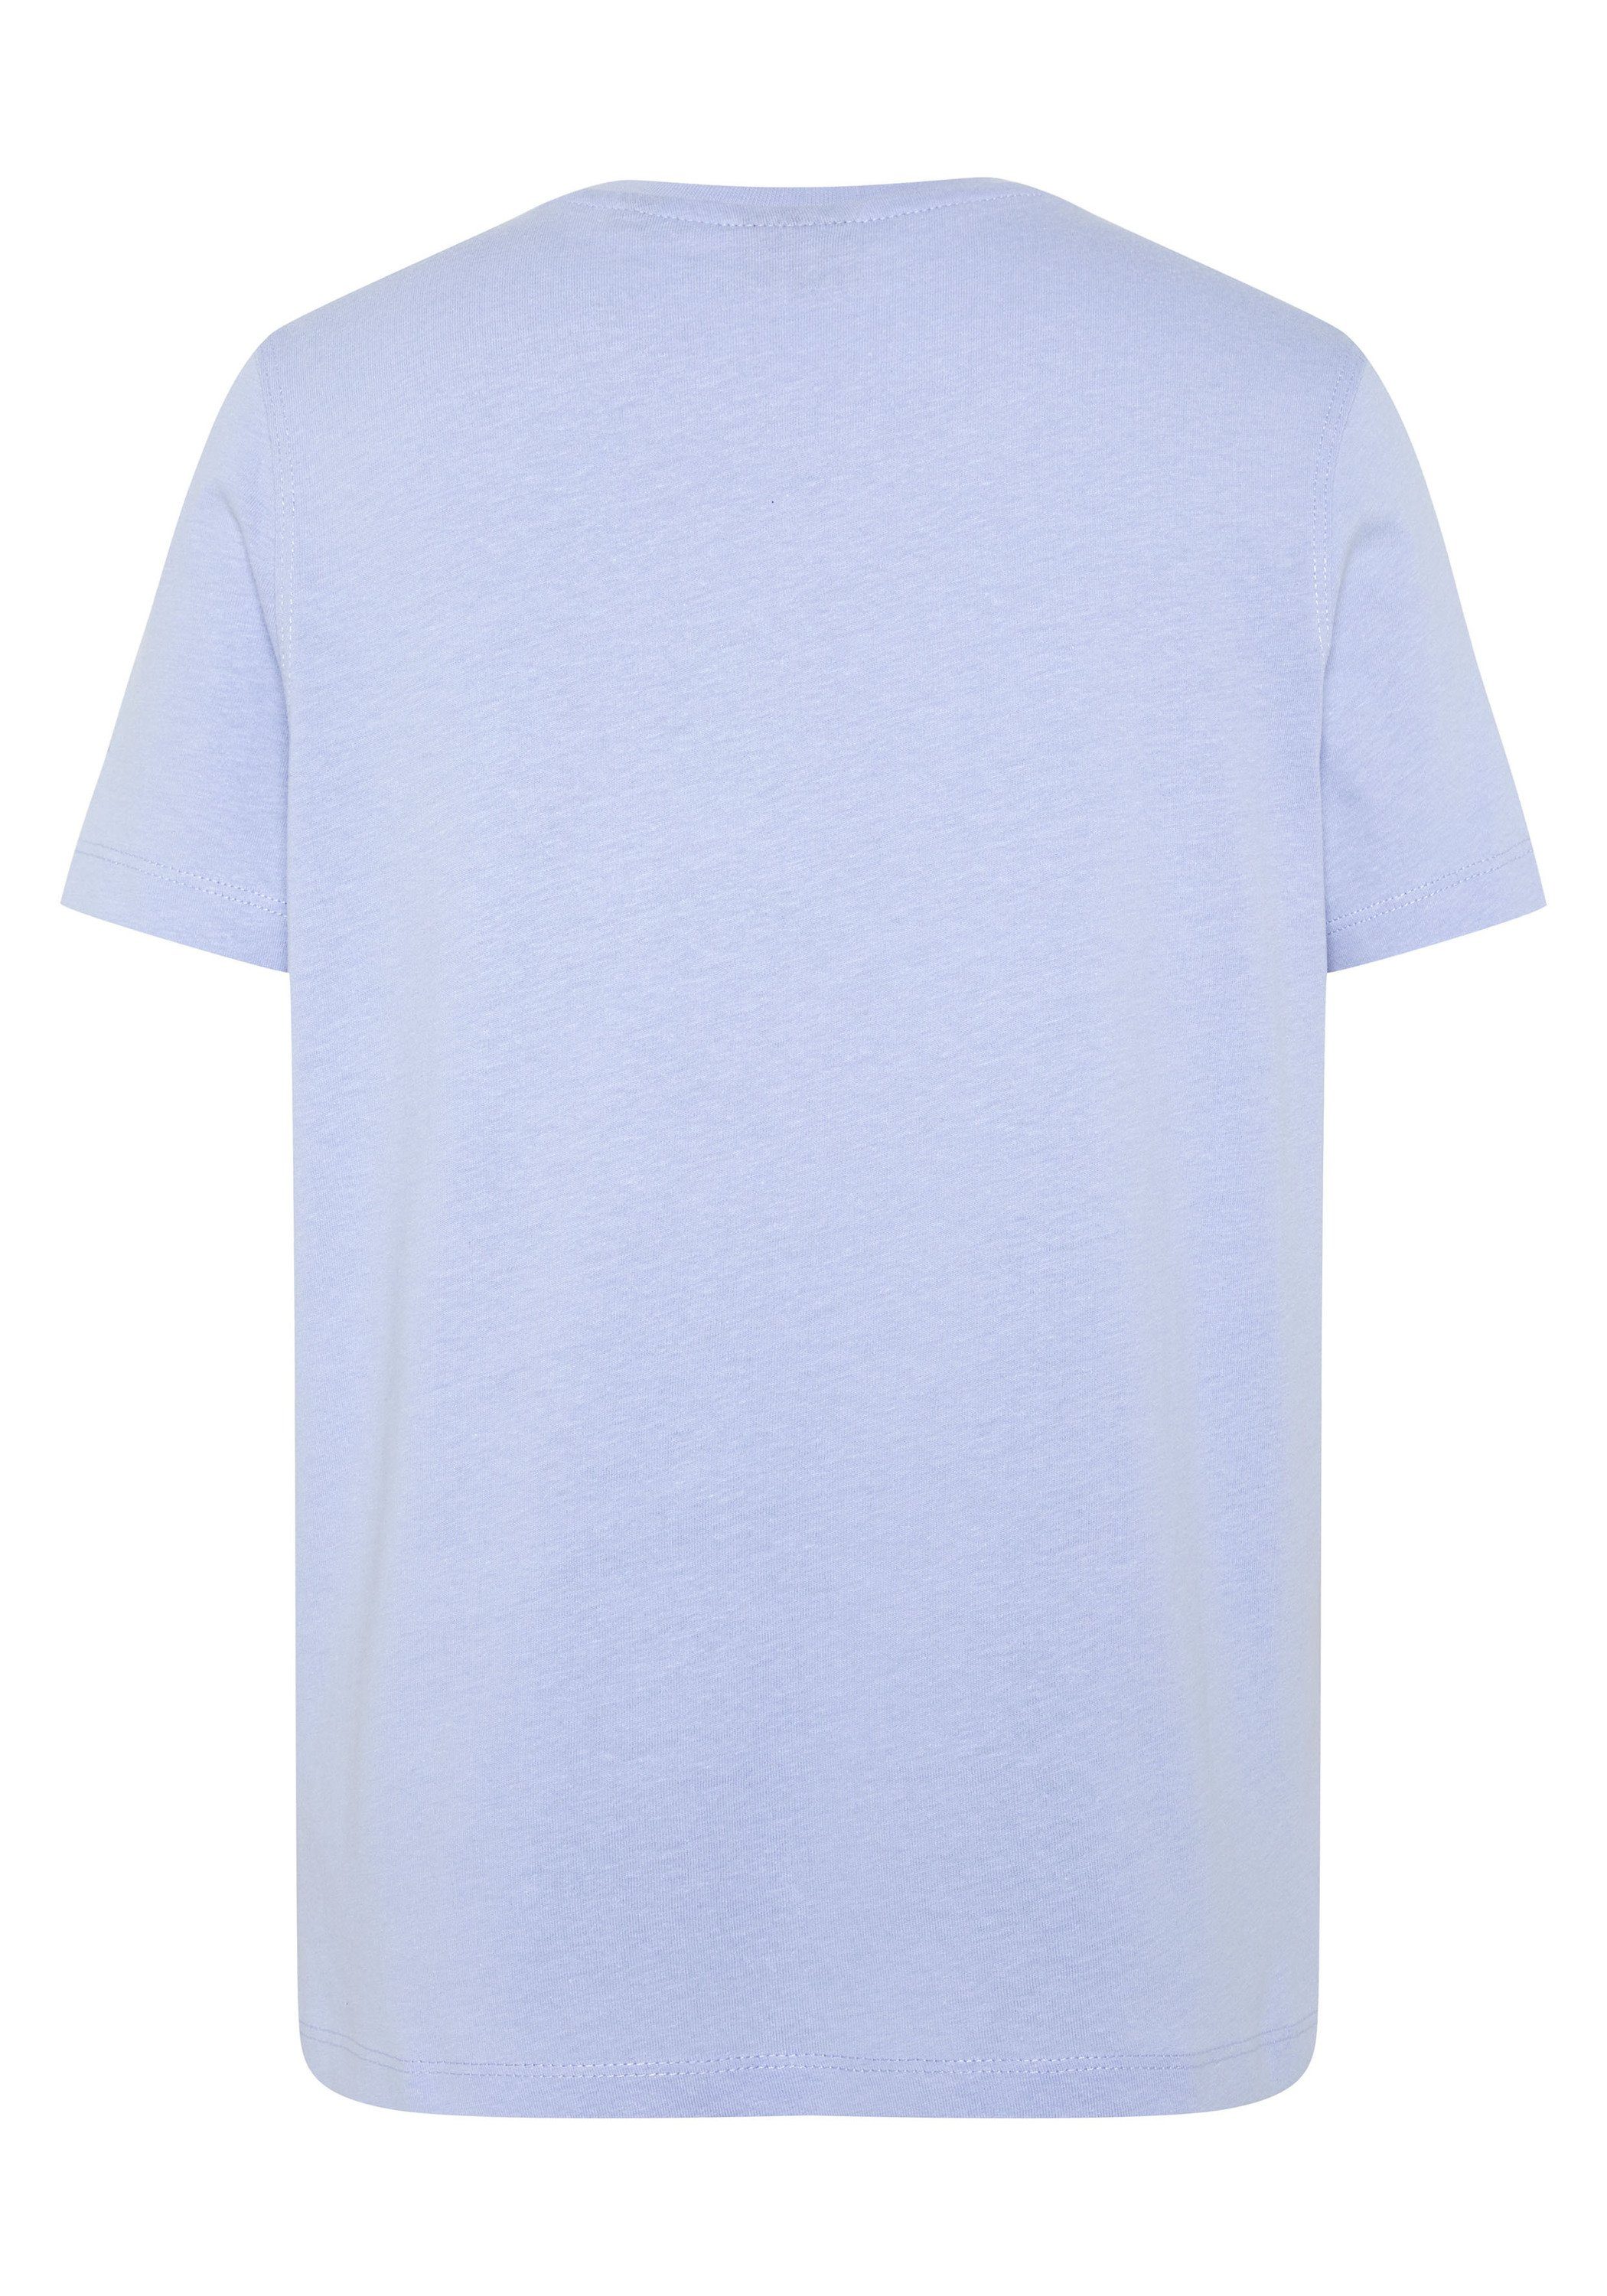 Polo Sylt reiner Blue Print-Shirt Brunnera Baumwolle 16-3922 aus